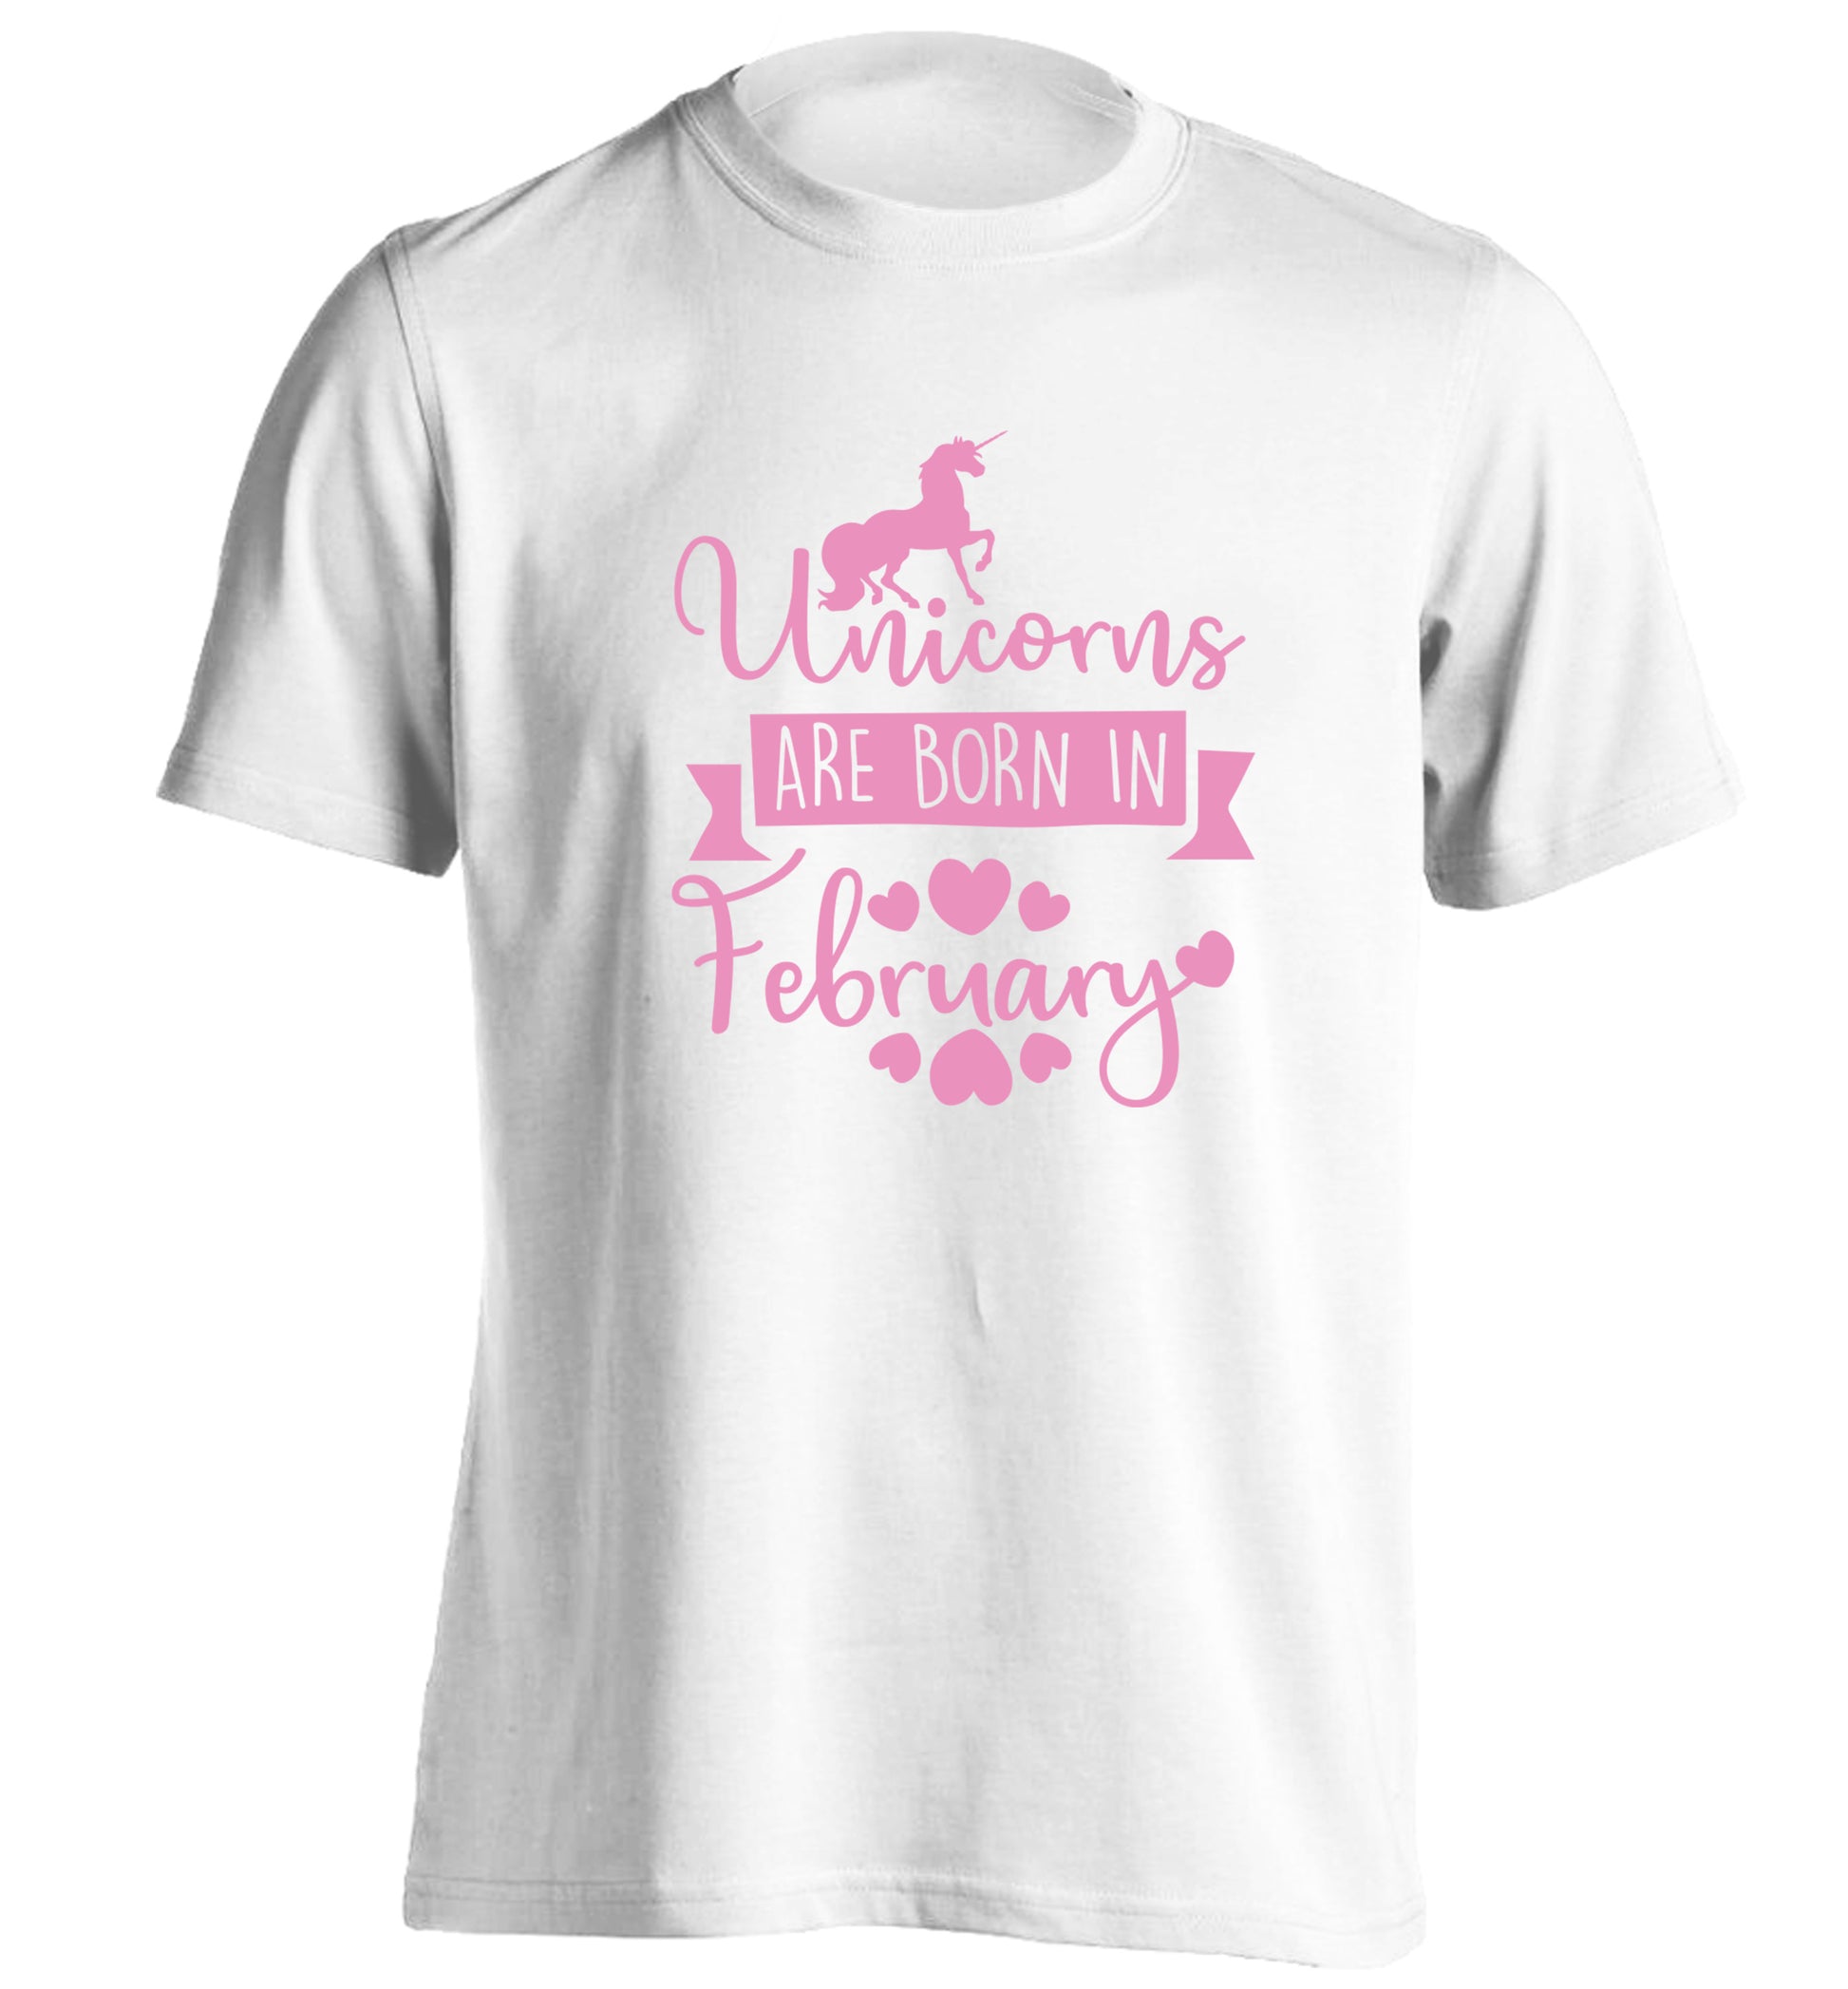 Unicorns are born in February adults unisex white Tshirt 2XL